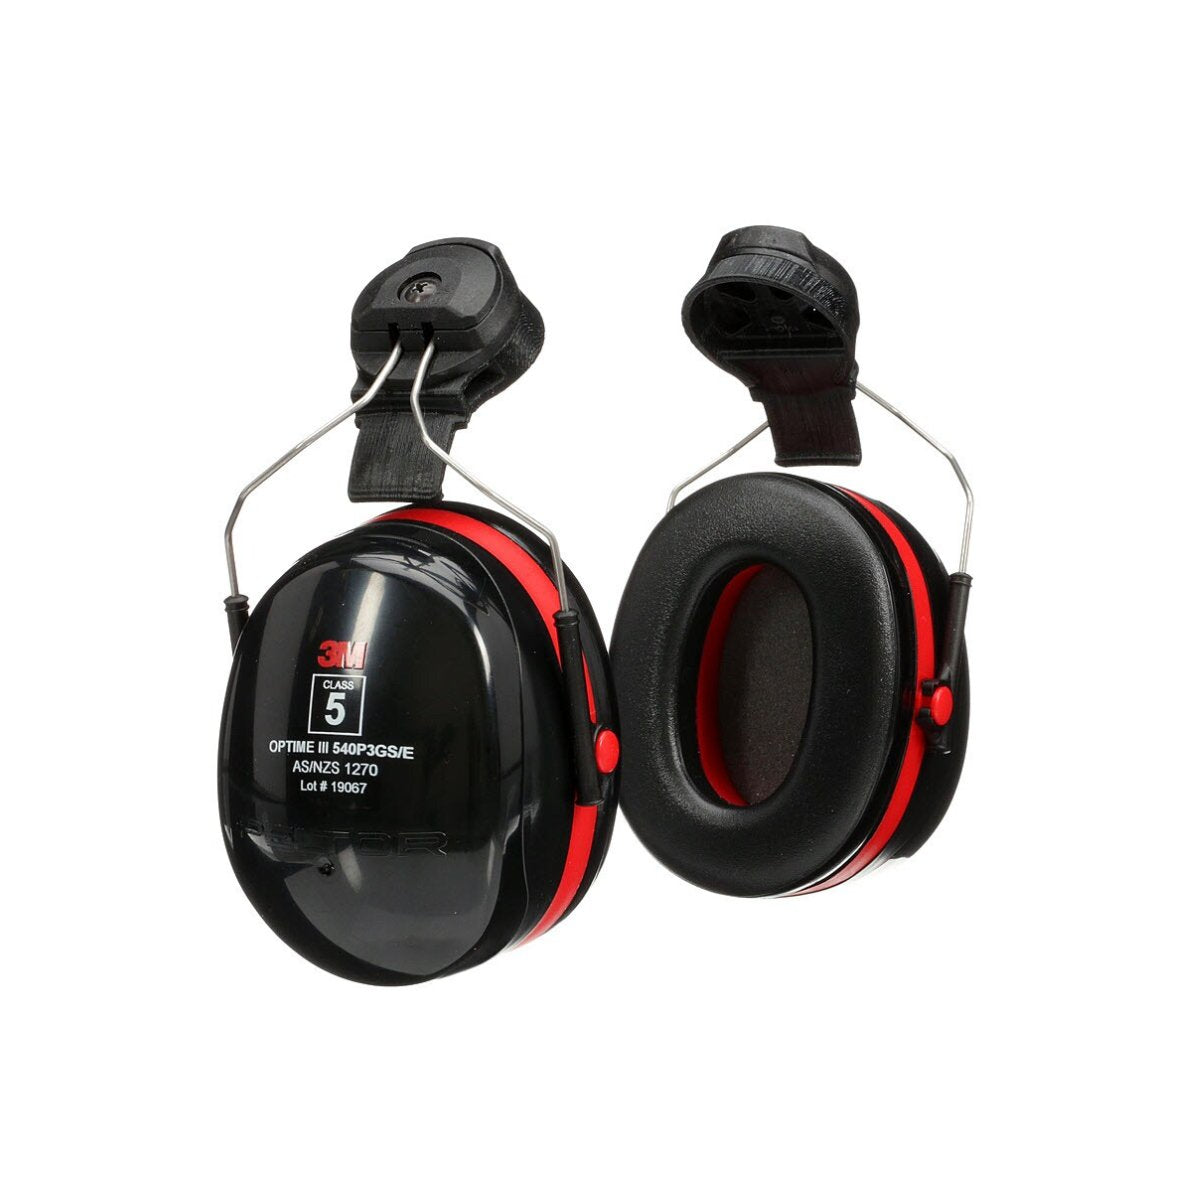 3M™ PELTOR™ Optime™ III Helmet Attach Earmuff, 33dB (Class 5) H540P3GS/E (Each)